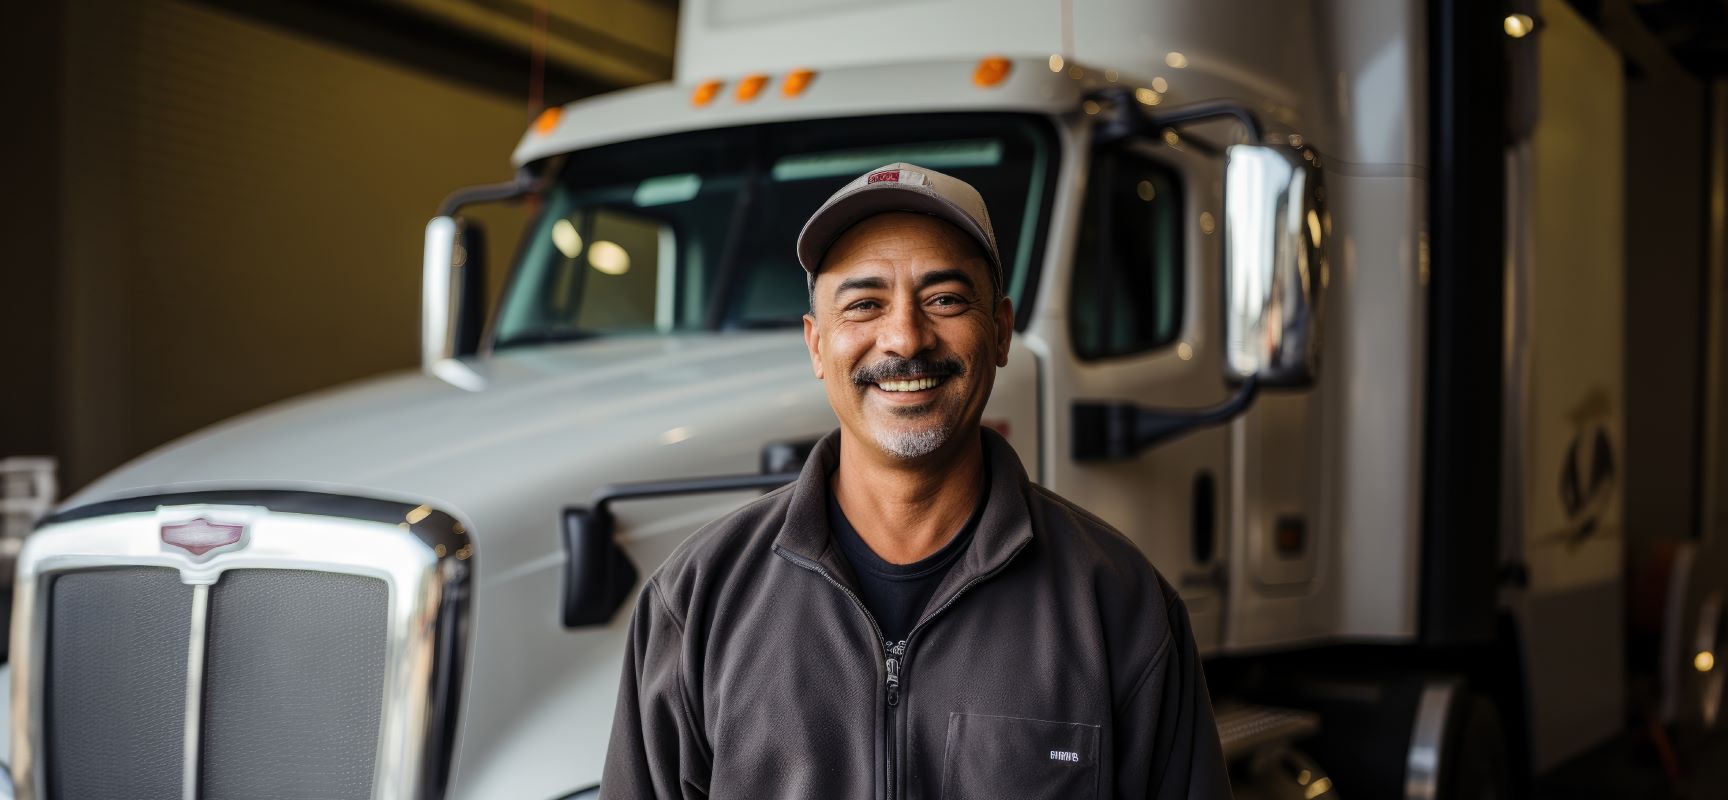 Smiling trucker in front of semi-truck